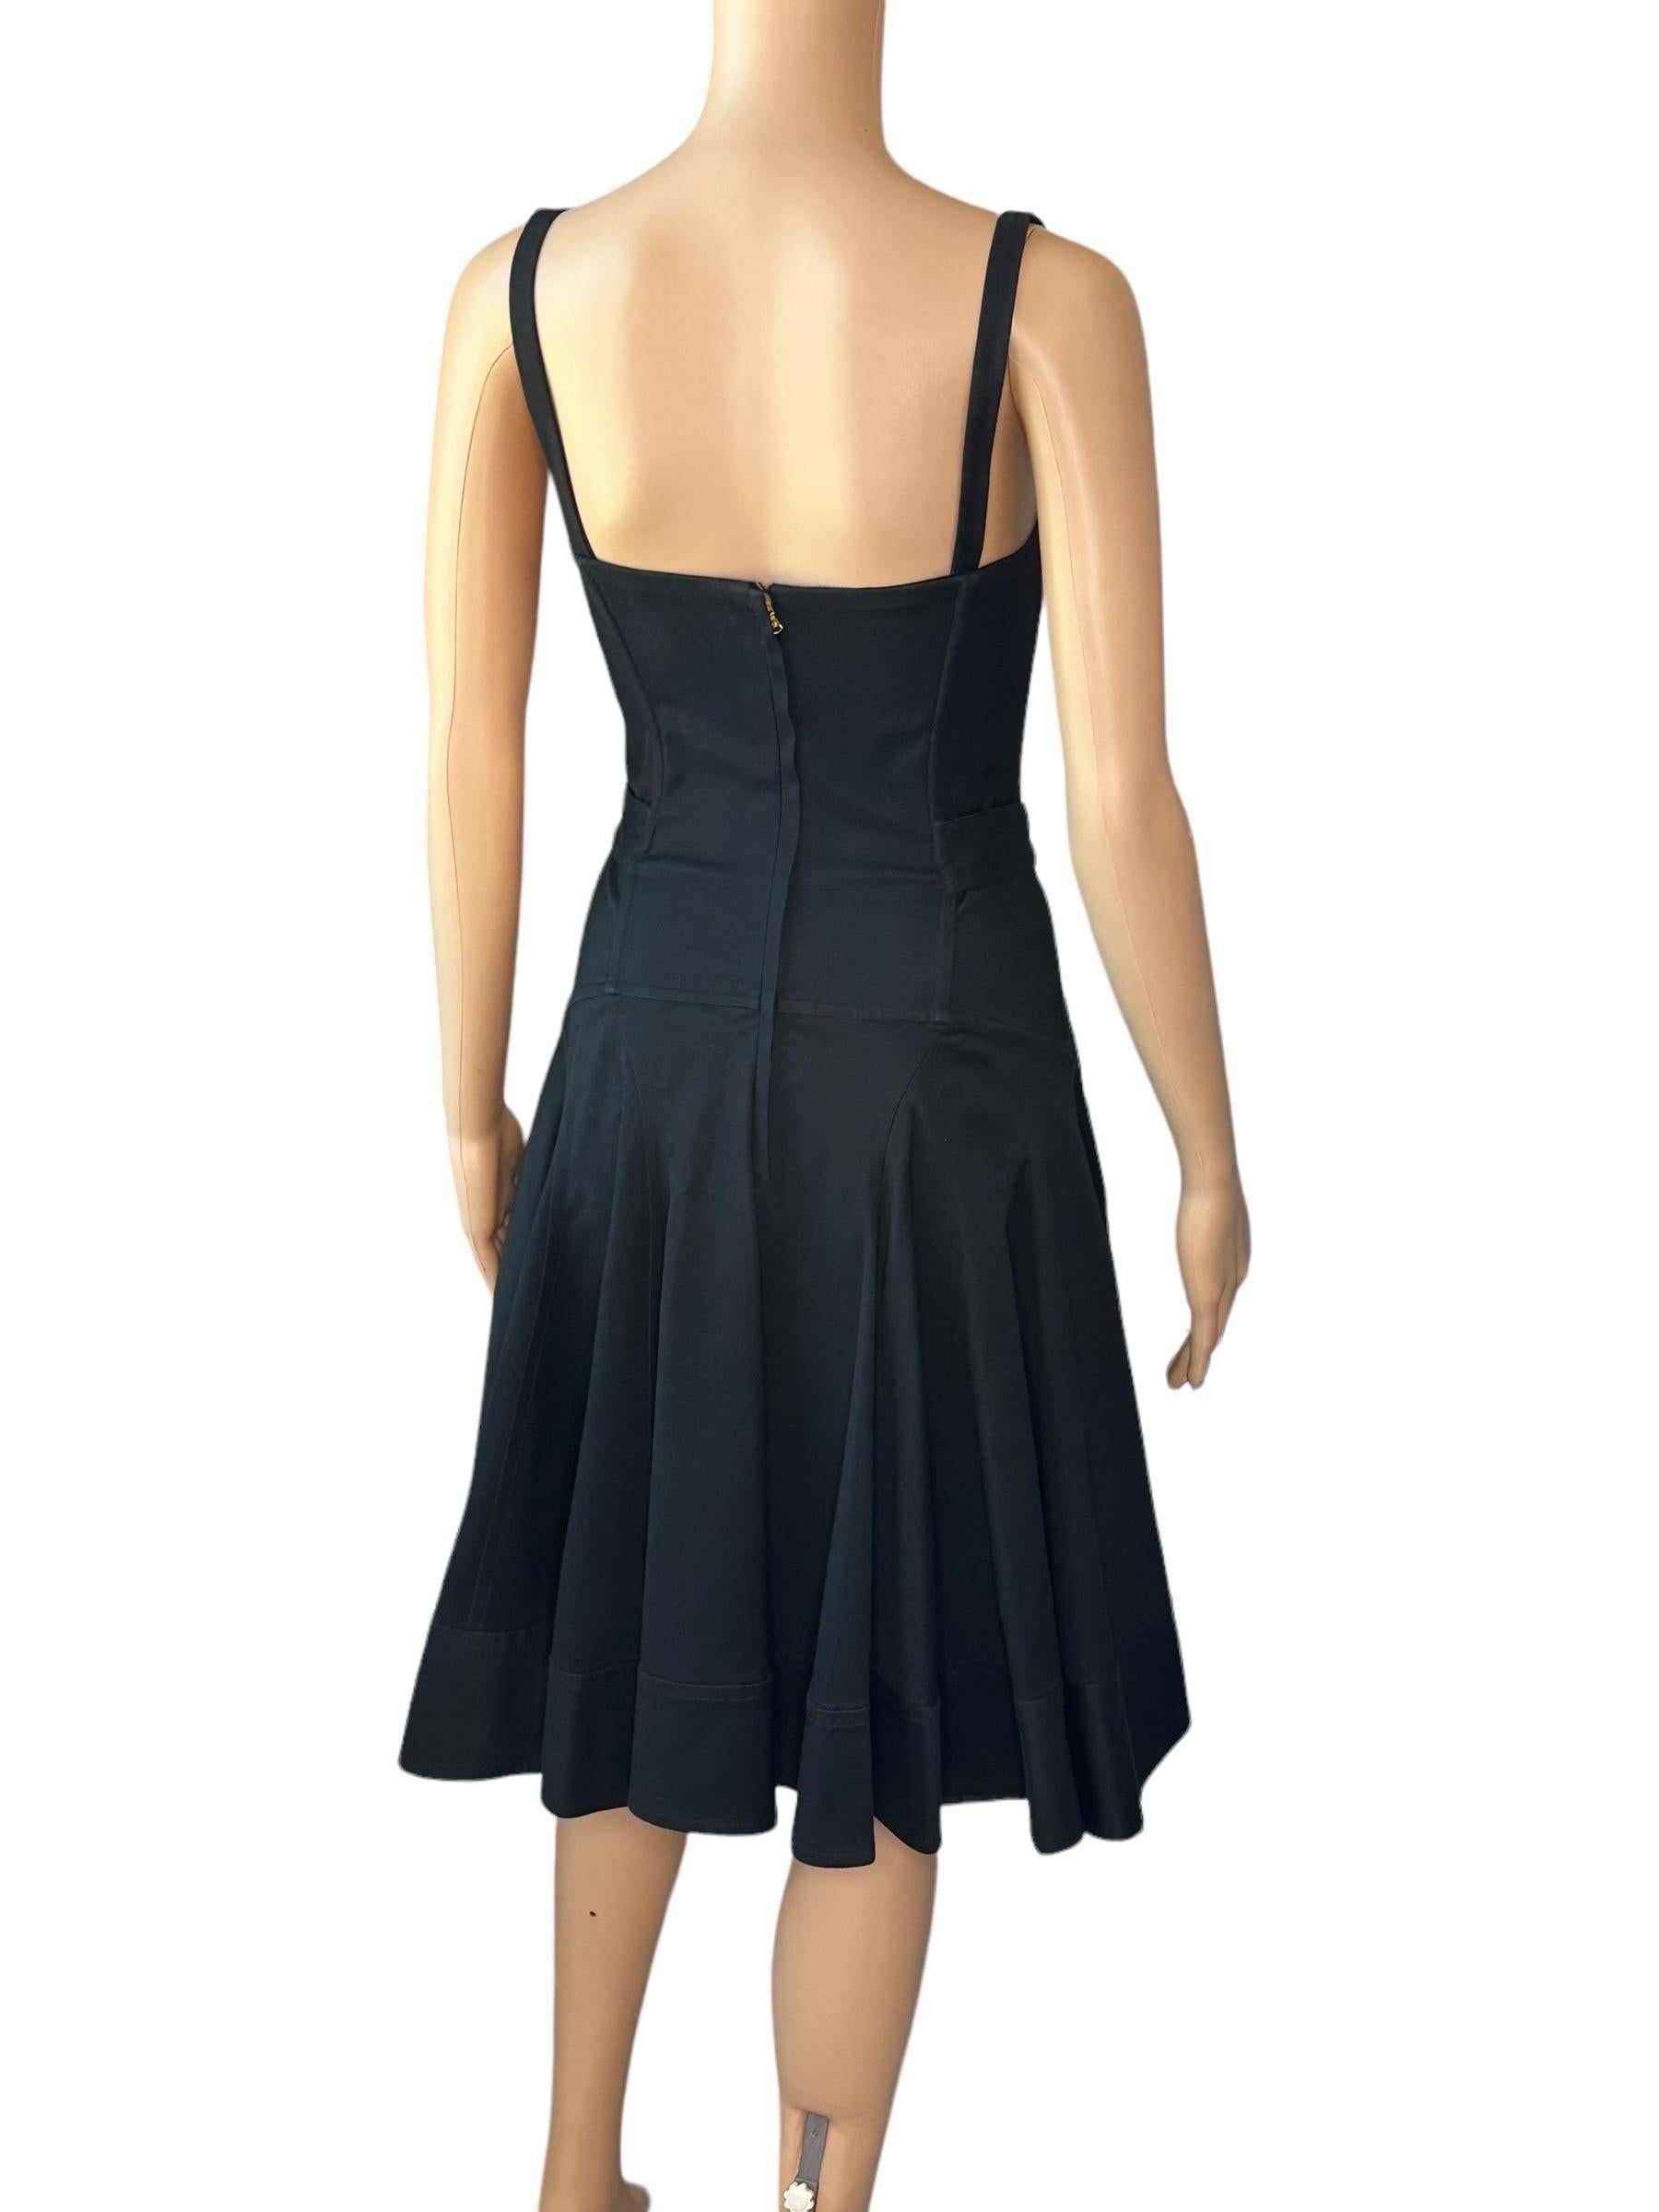 Dolce & Gabbana S/S 2007 Unworn Corset Lace-Up Bustier Black Dress For Sale 5